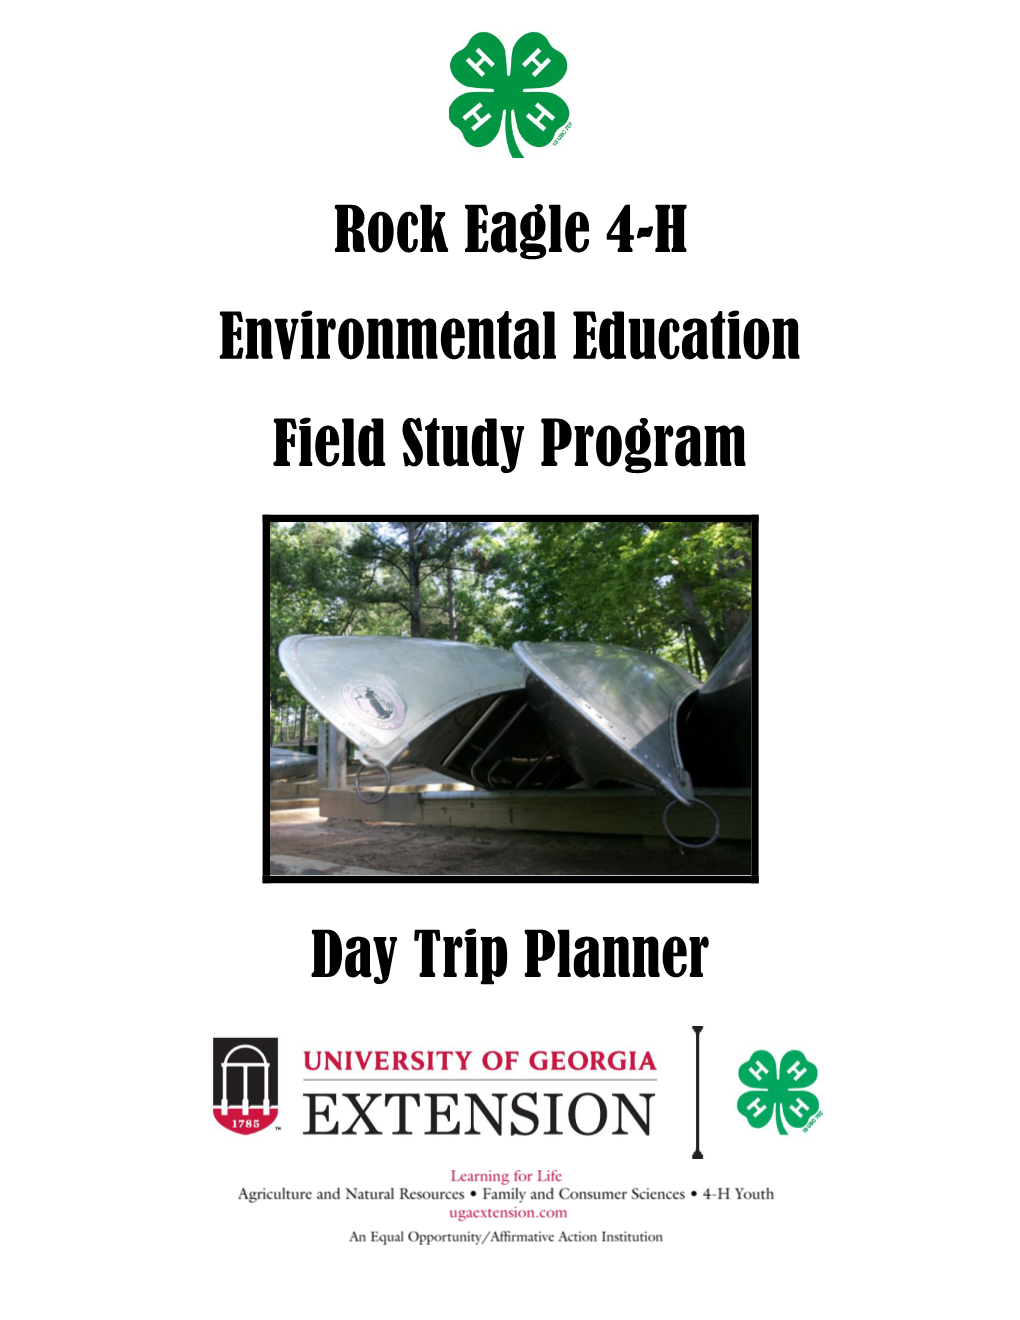 Rock Eagle 4-H Environmental Education Field Study Program Day